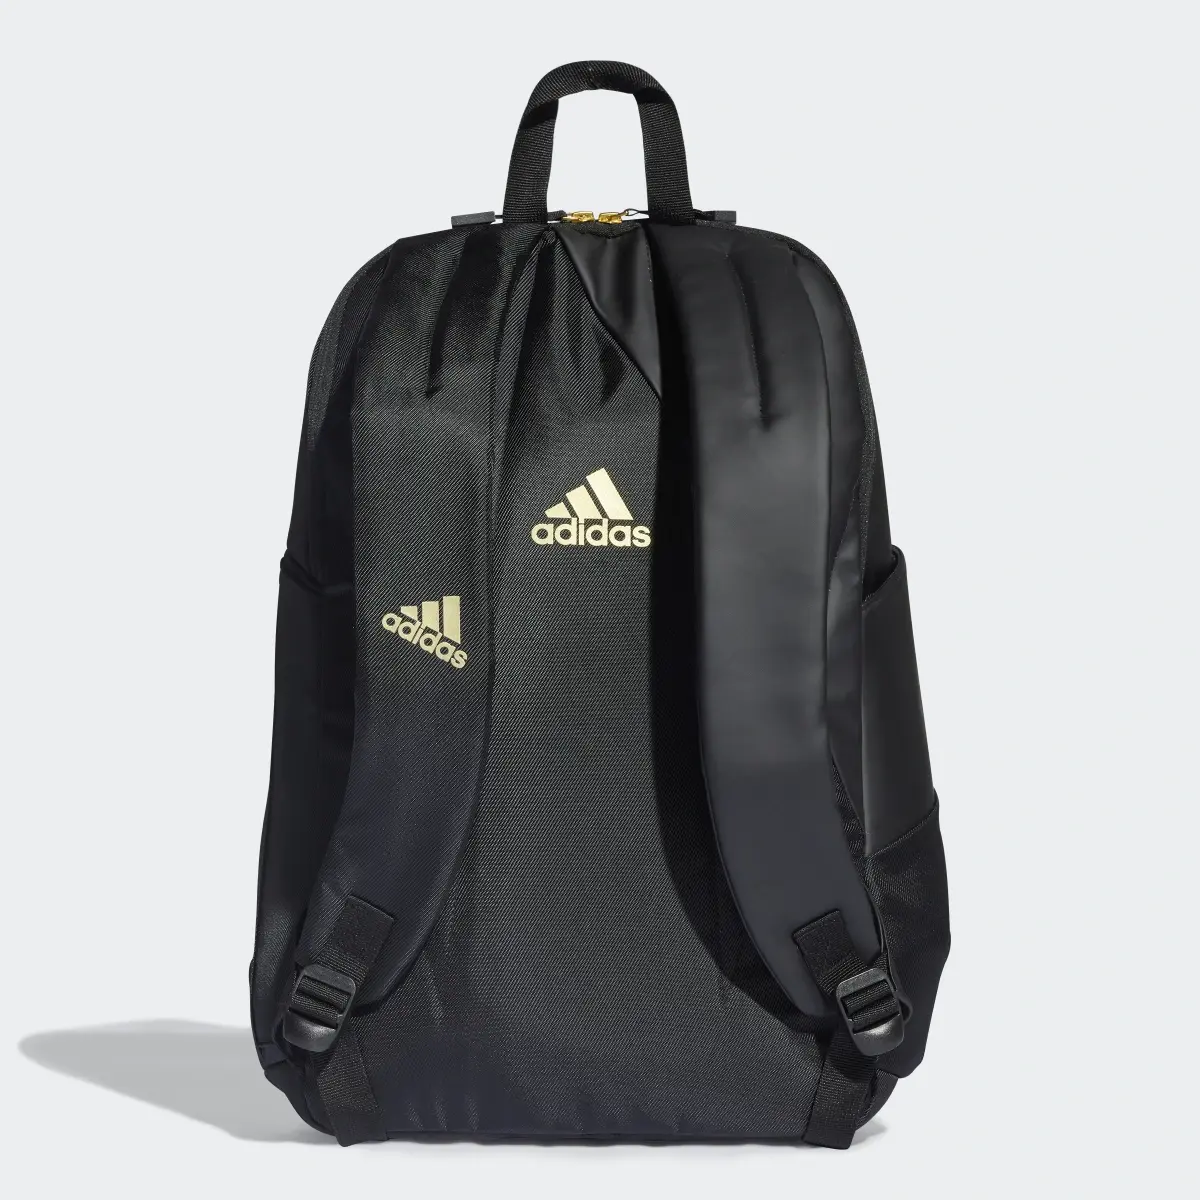 Adidas VS.6 Black/Gold Rucksack. 3